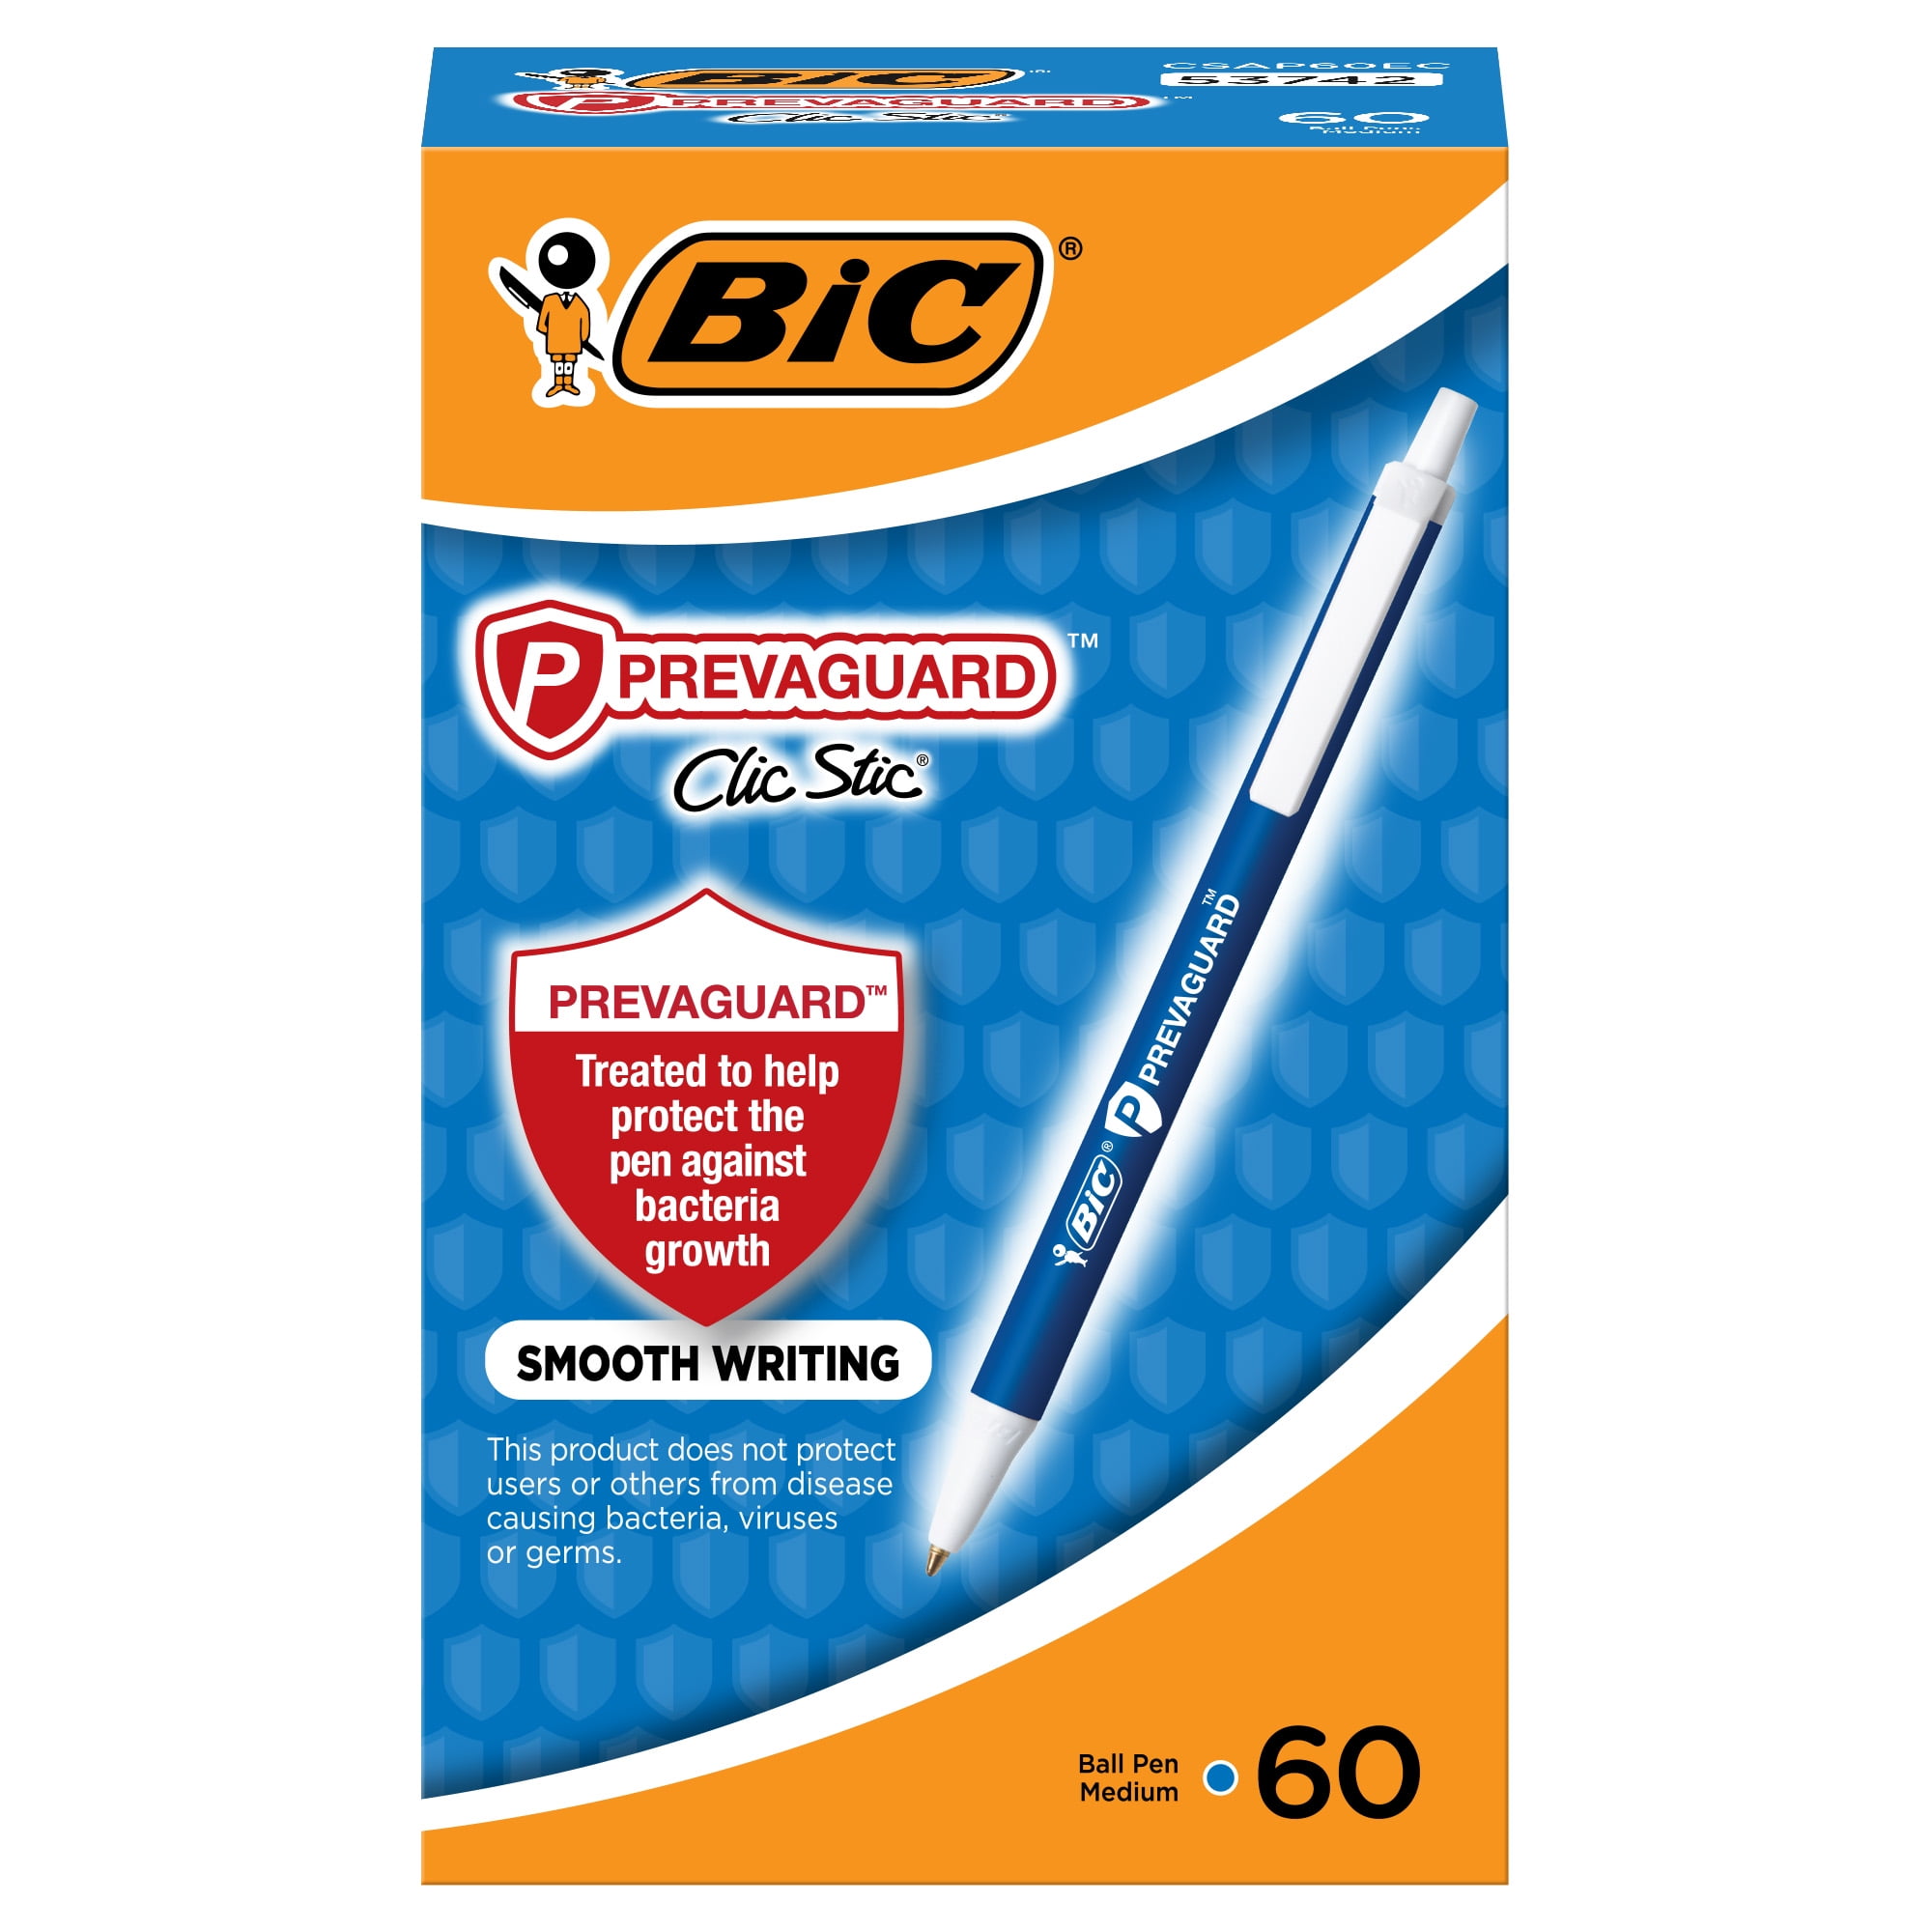 BIC Cristal Stic Ballpoint Pen, 1 mm, Blue, 12 Pack